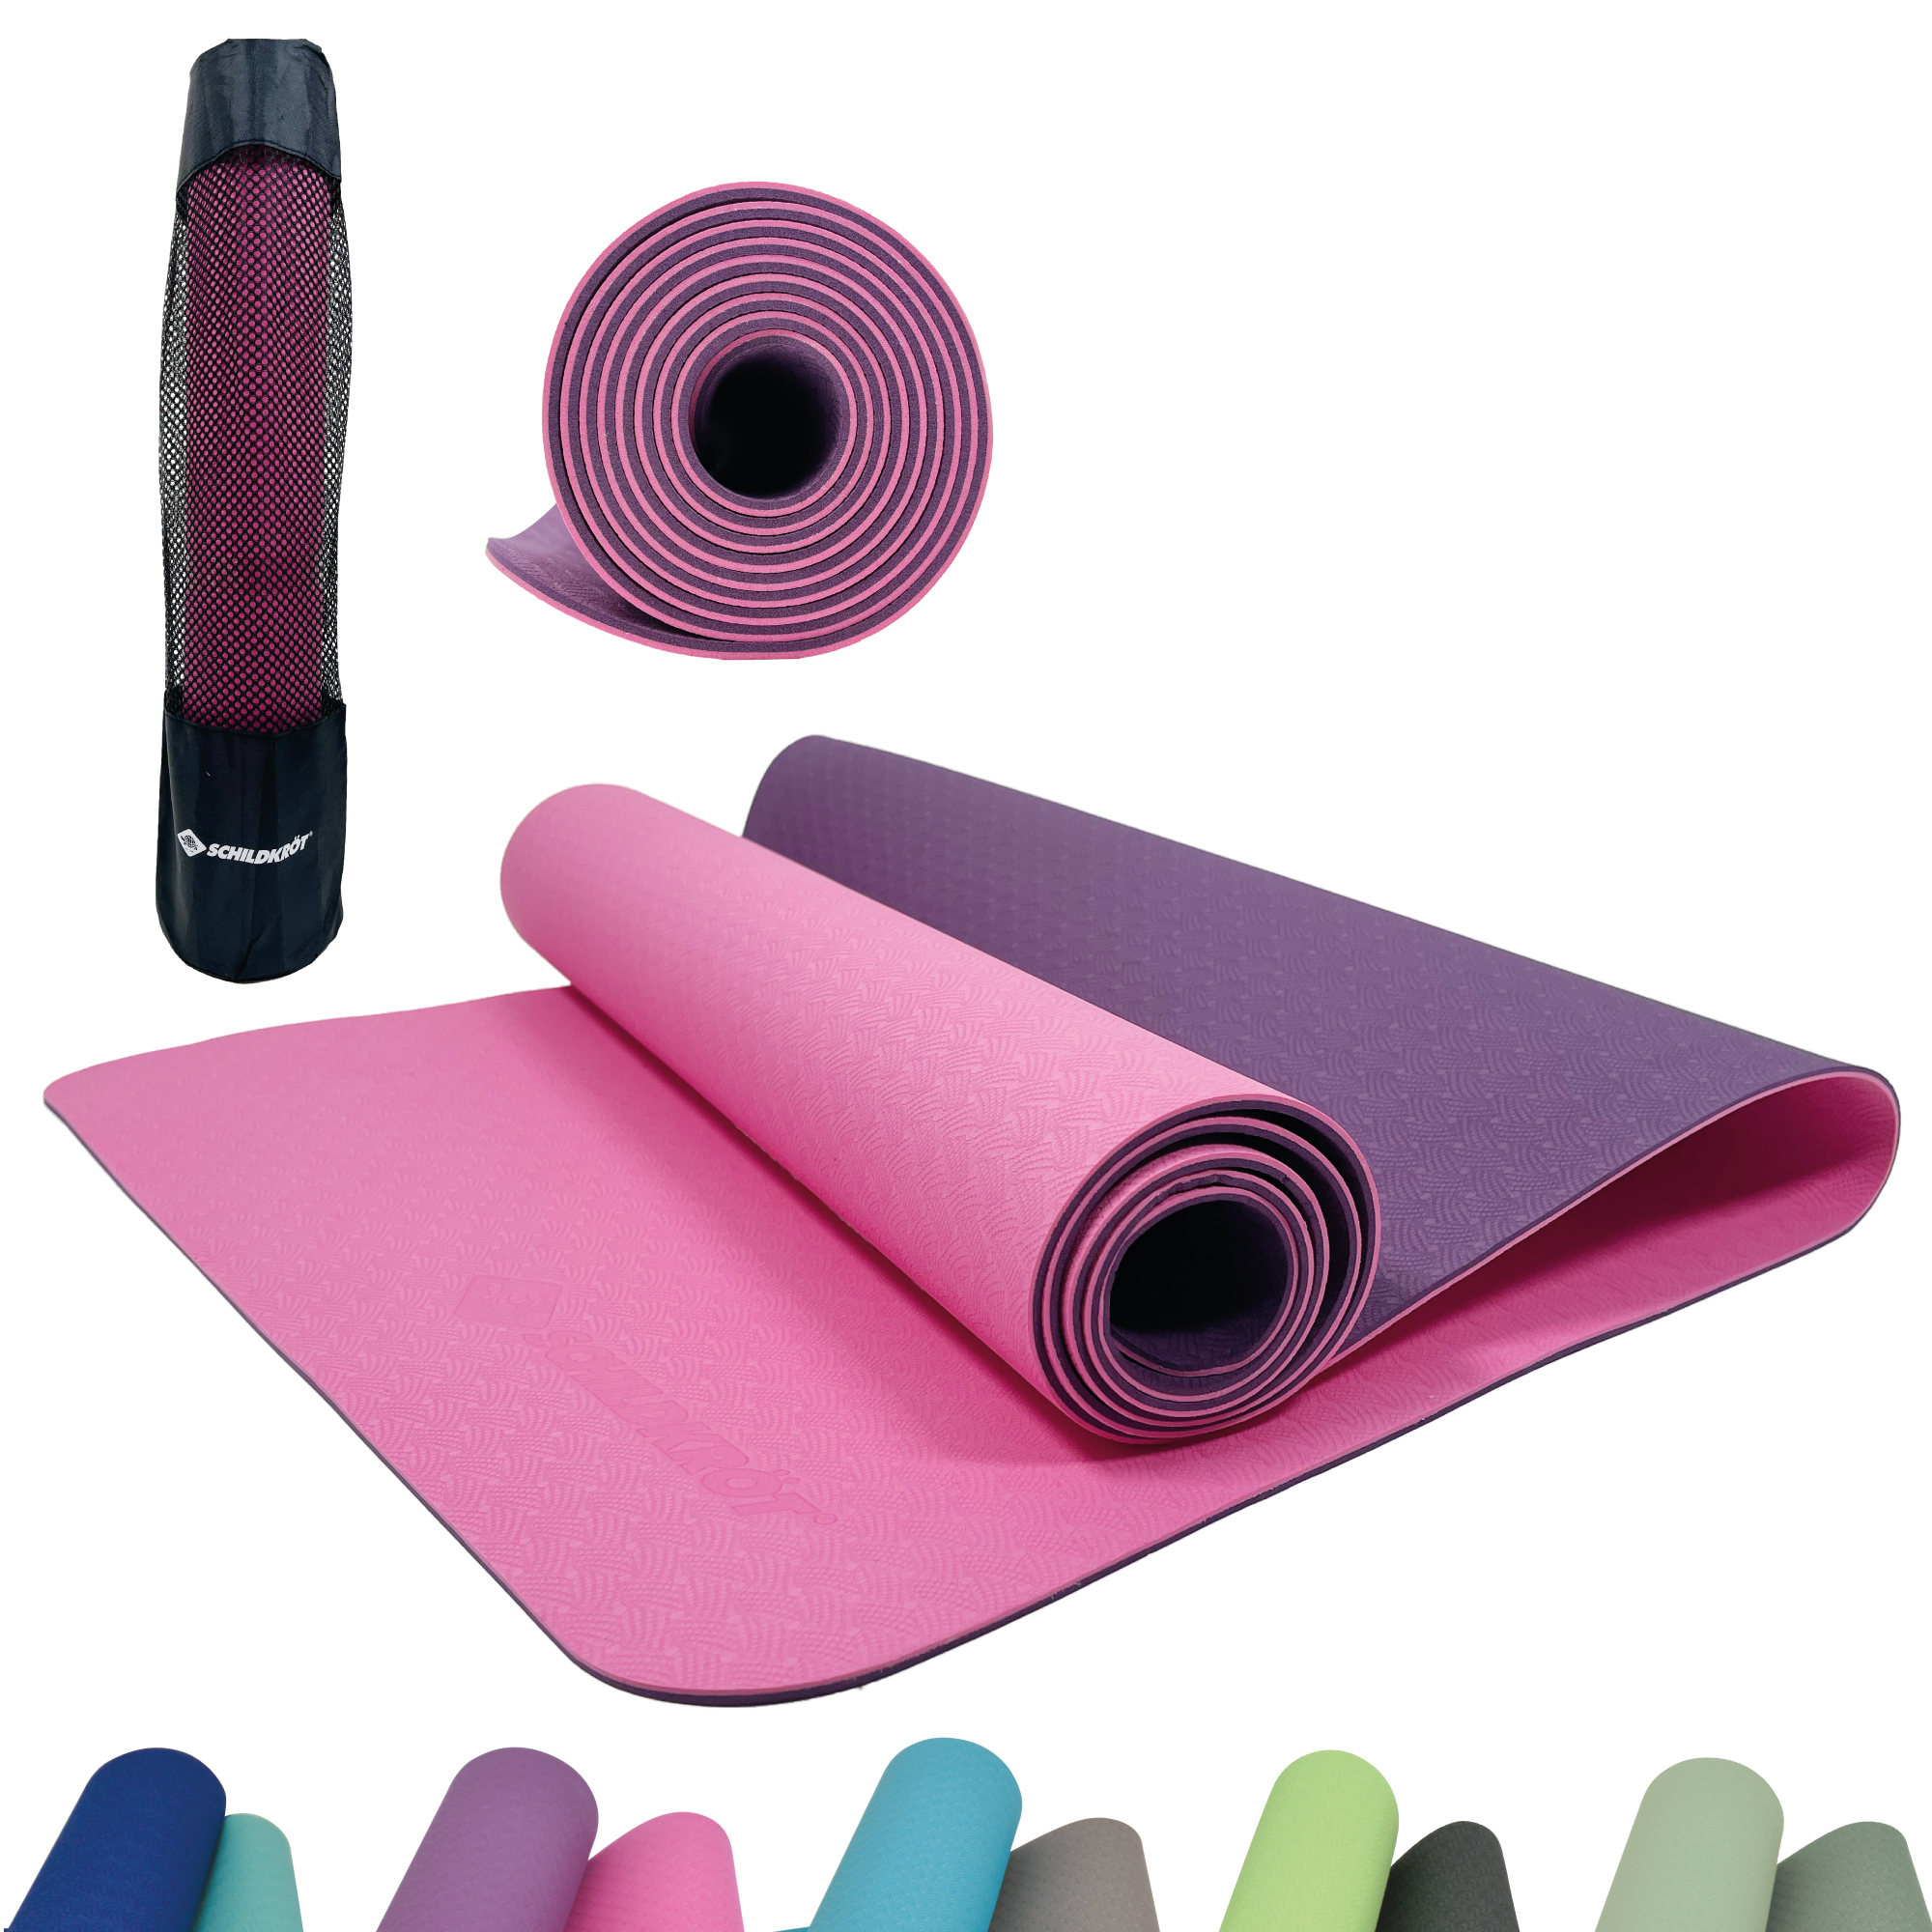 Schildkröt Bicolor Yogamatte, Purple-Pink, 4mm, PVC-frei, im Carrybag Art. 960069